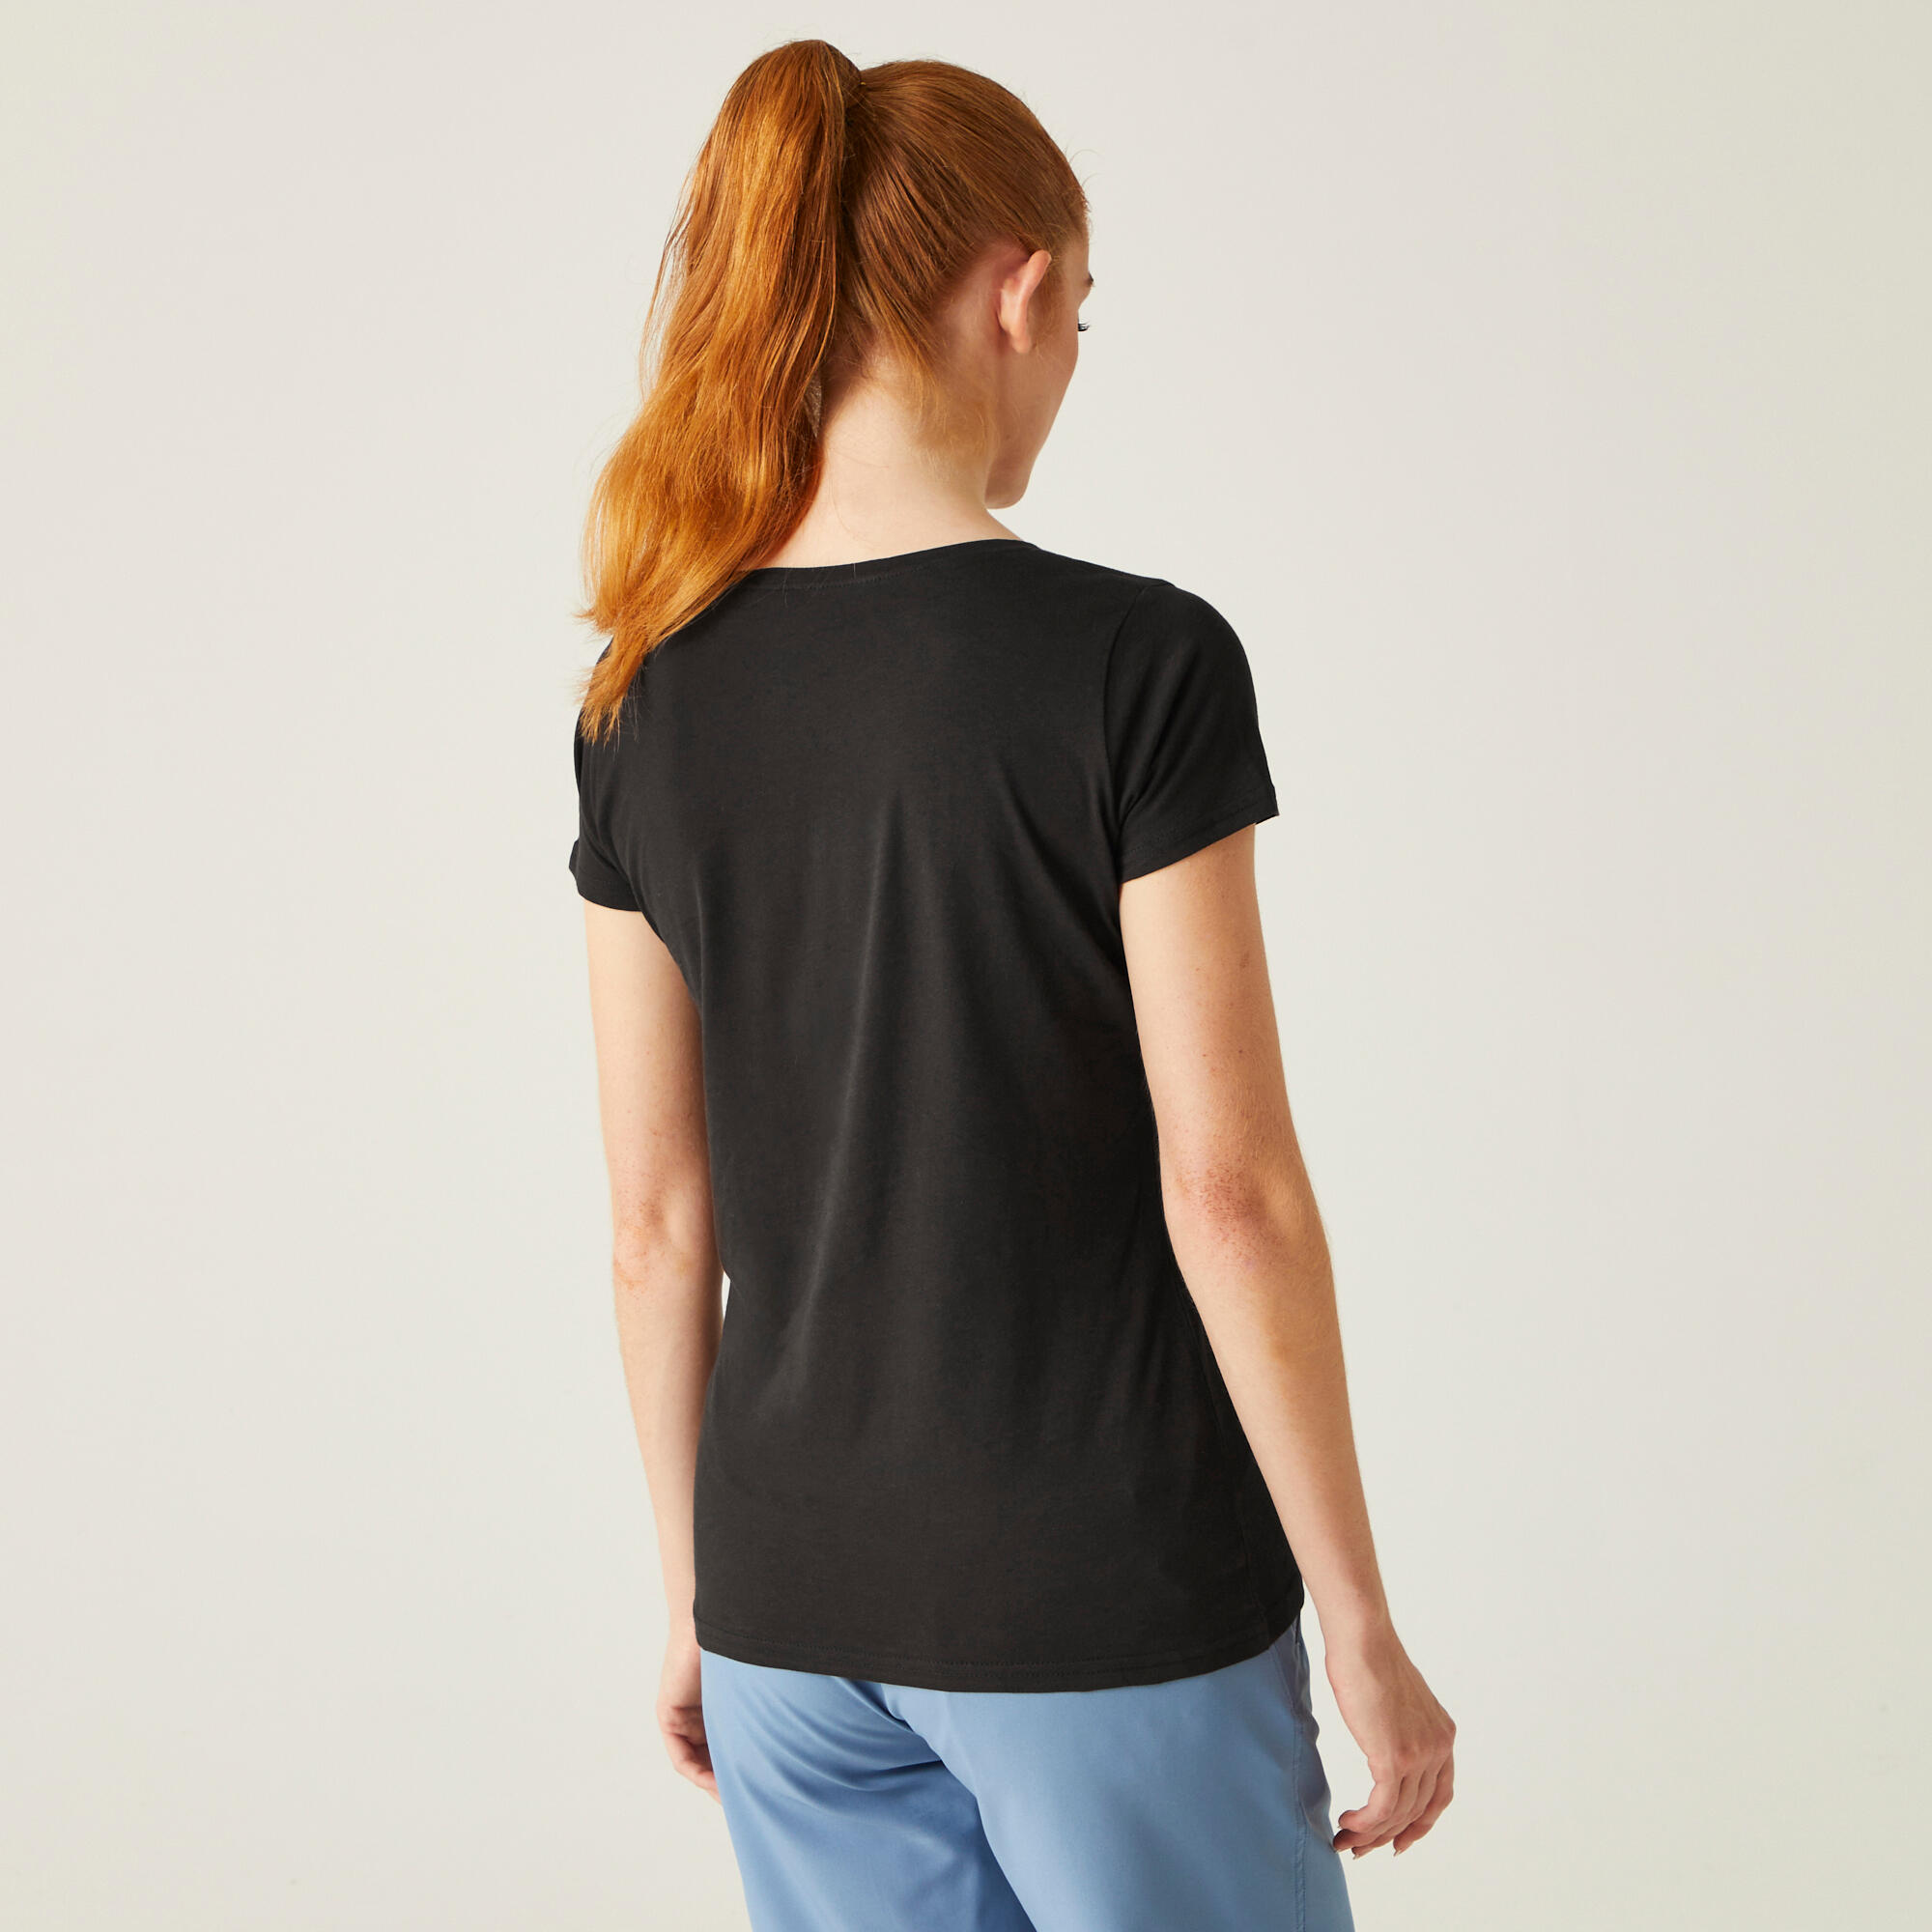 Carlie Women's Walking Short Sleeve T-Shirt - Black 2/5